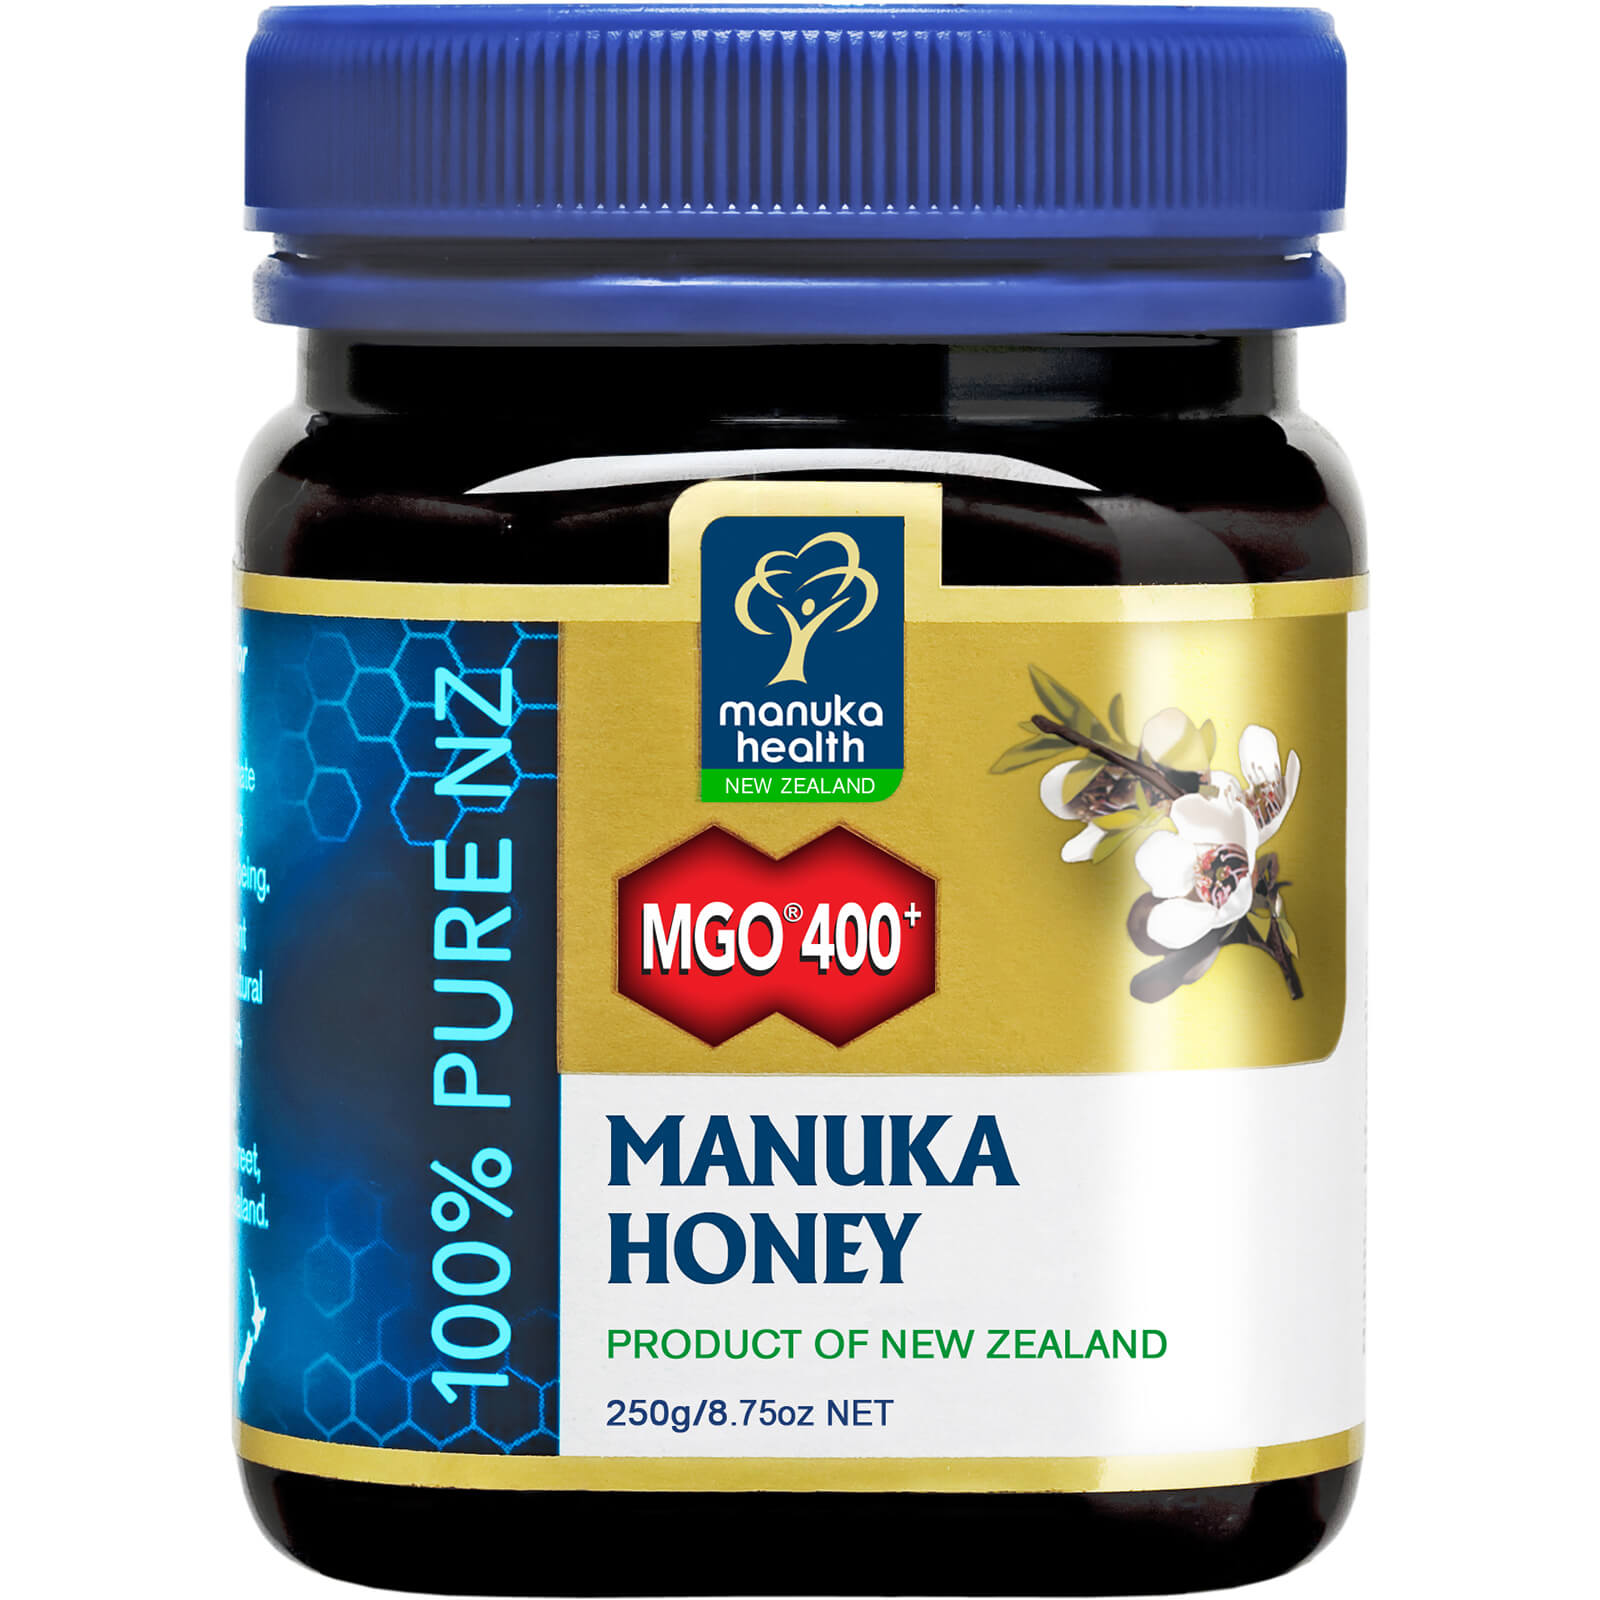 MGO 400+ Pure Manuka Honey Blend - 250G